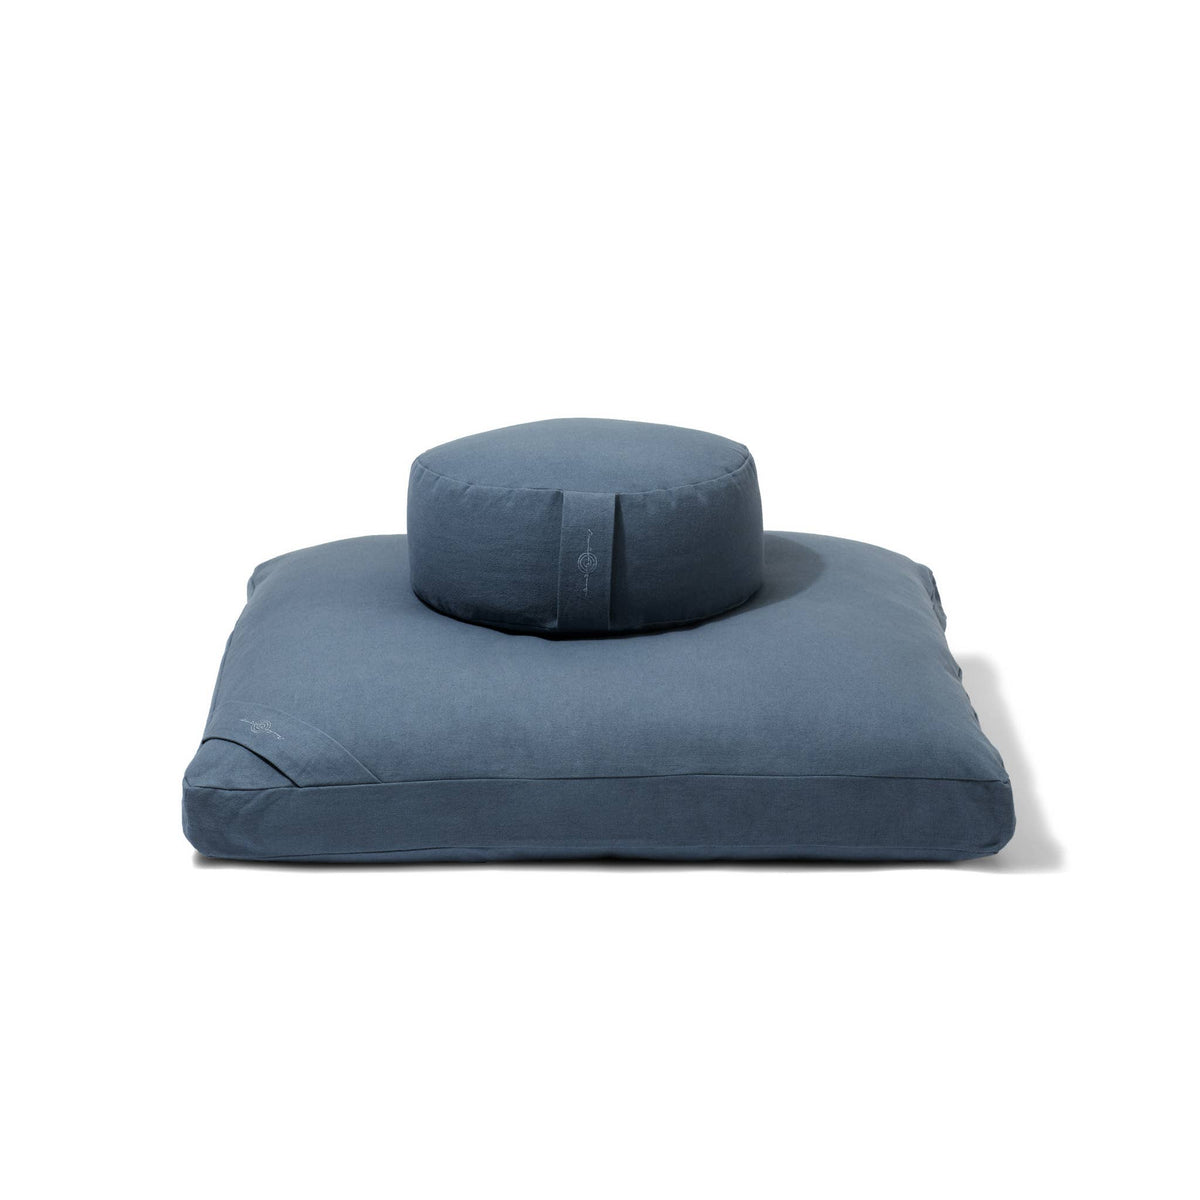 Organic Meditation Cushion Set - teal